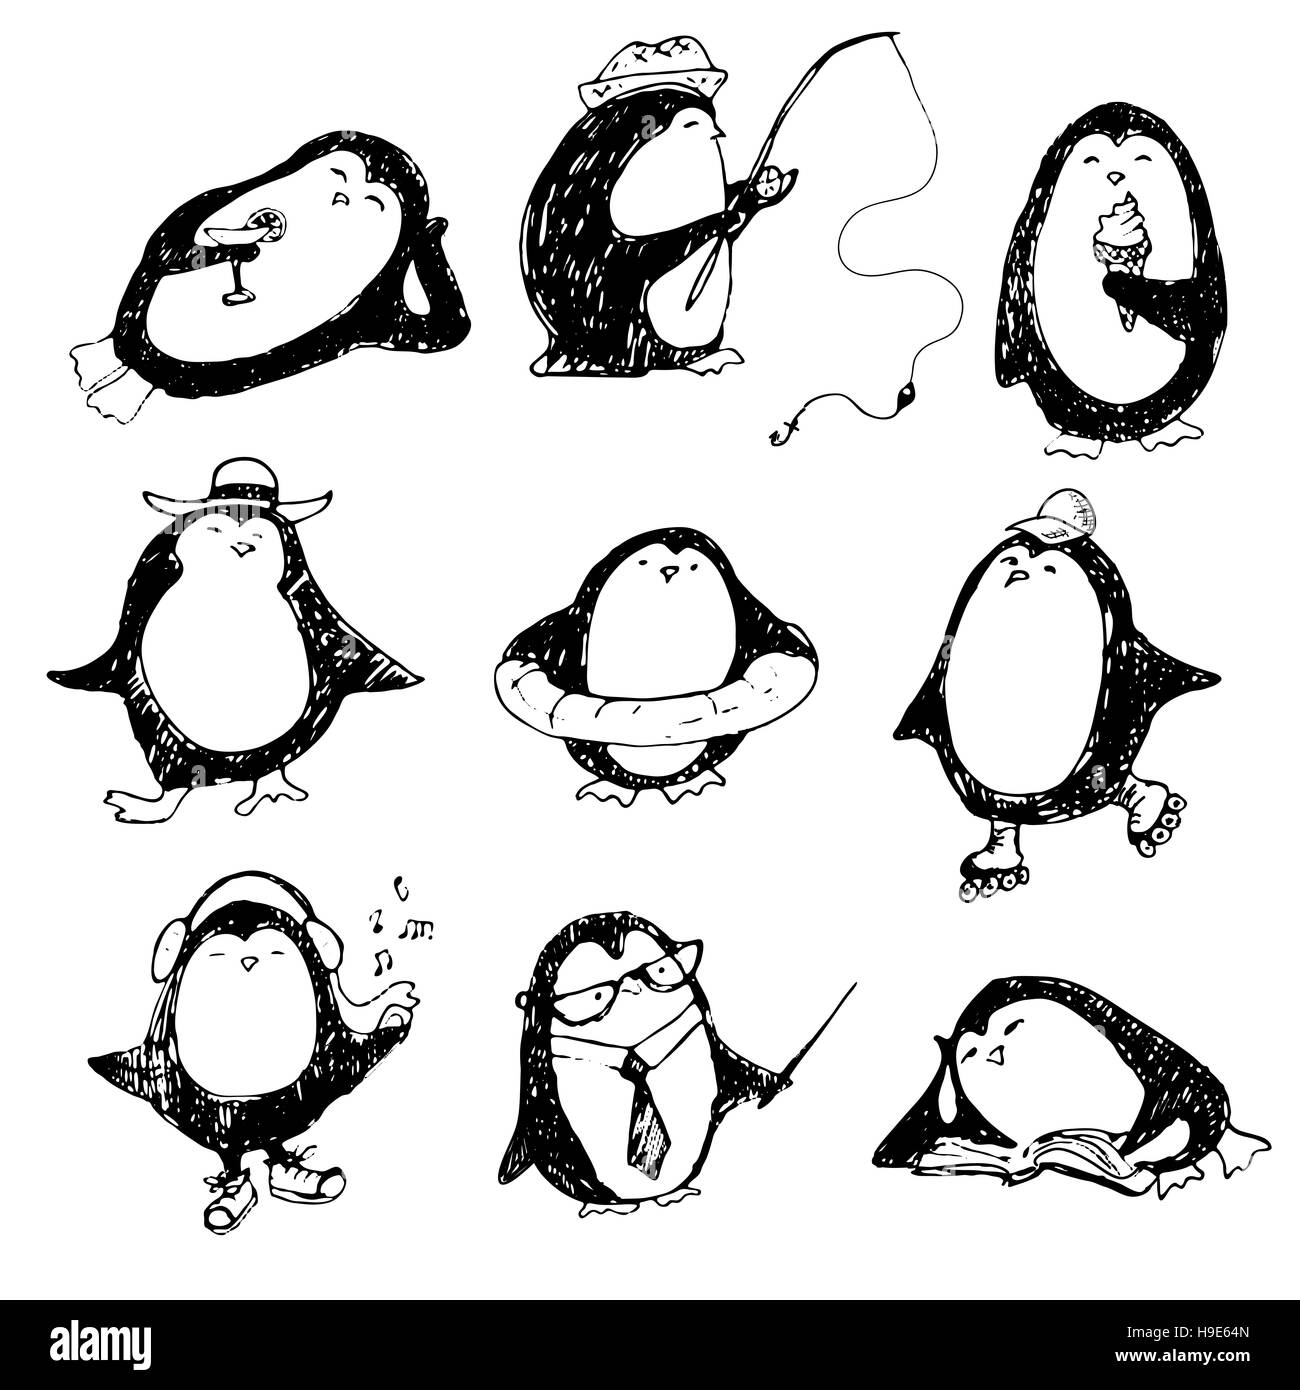 Cute hand drawn penguins set. Merry Christmas greetings Stock Photo